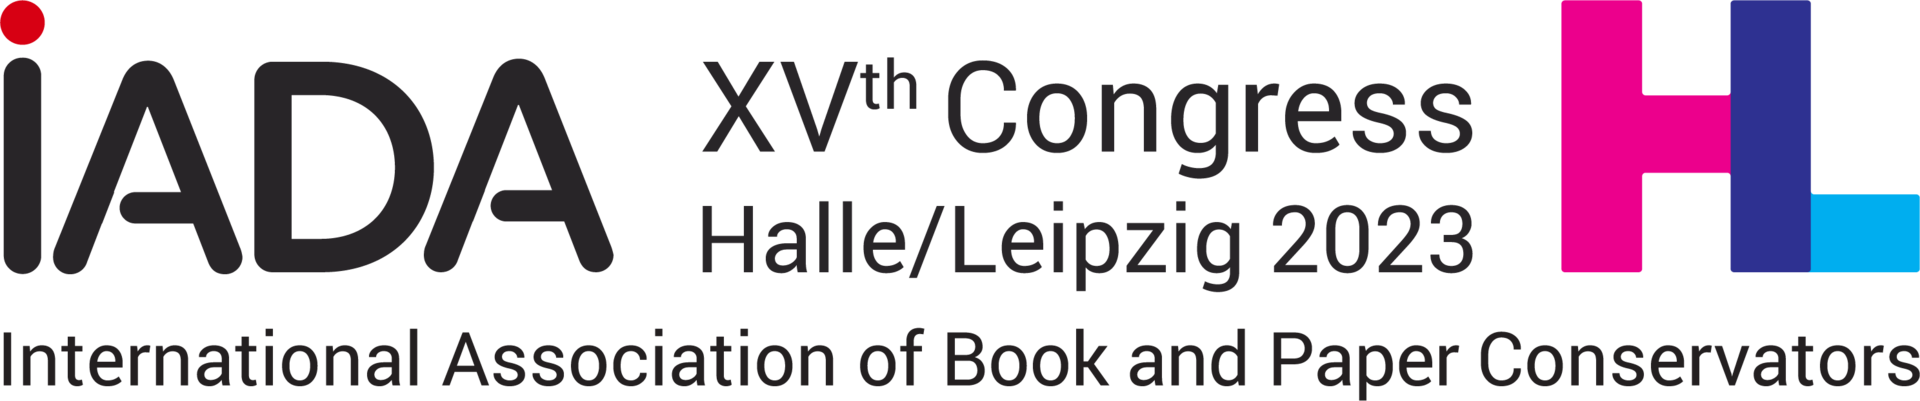 Logo IADA Kongress Halle/Leipzig 2023